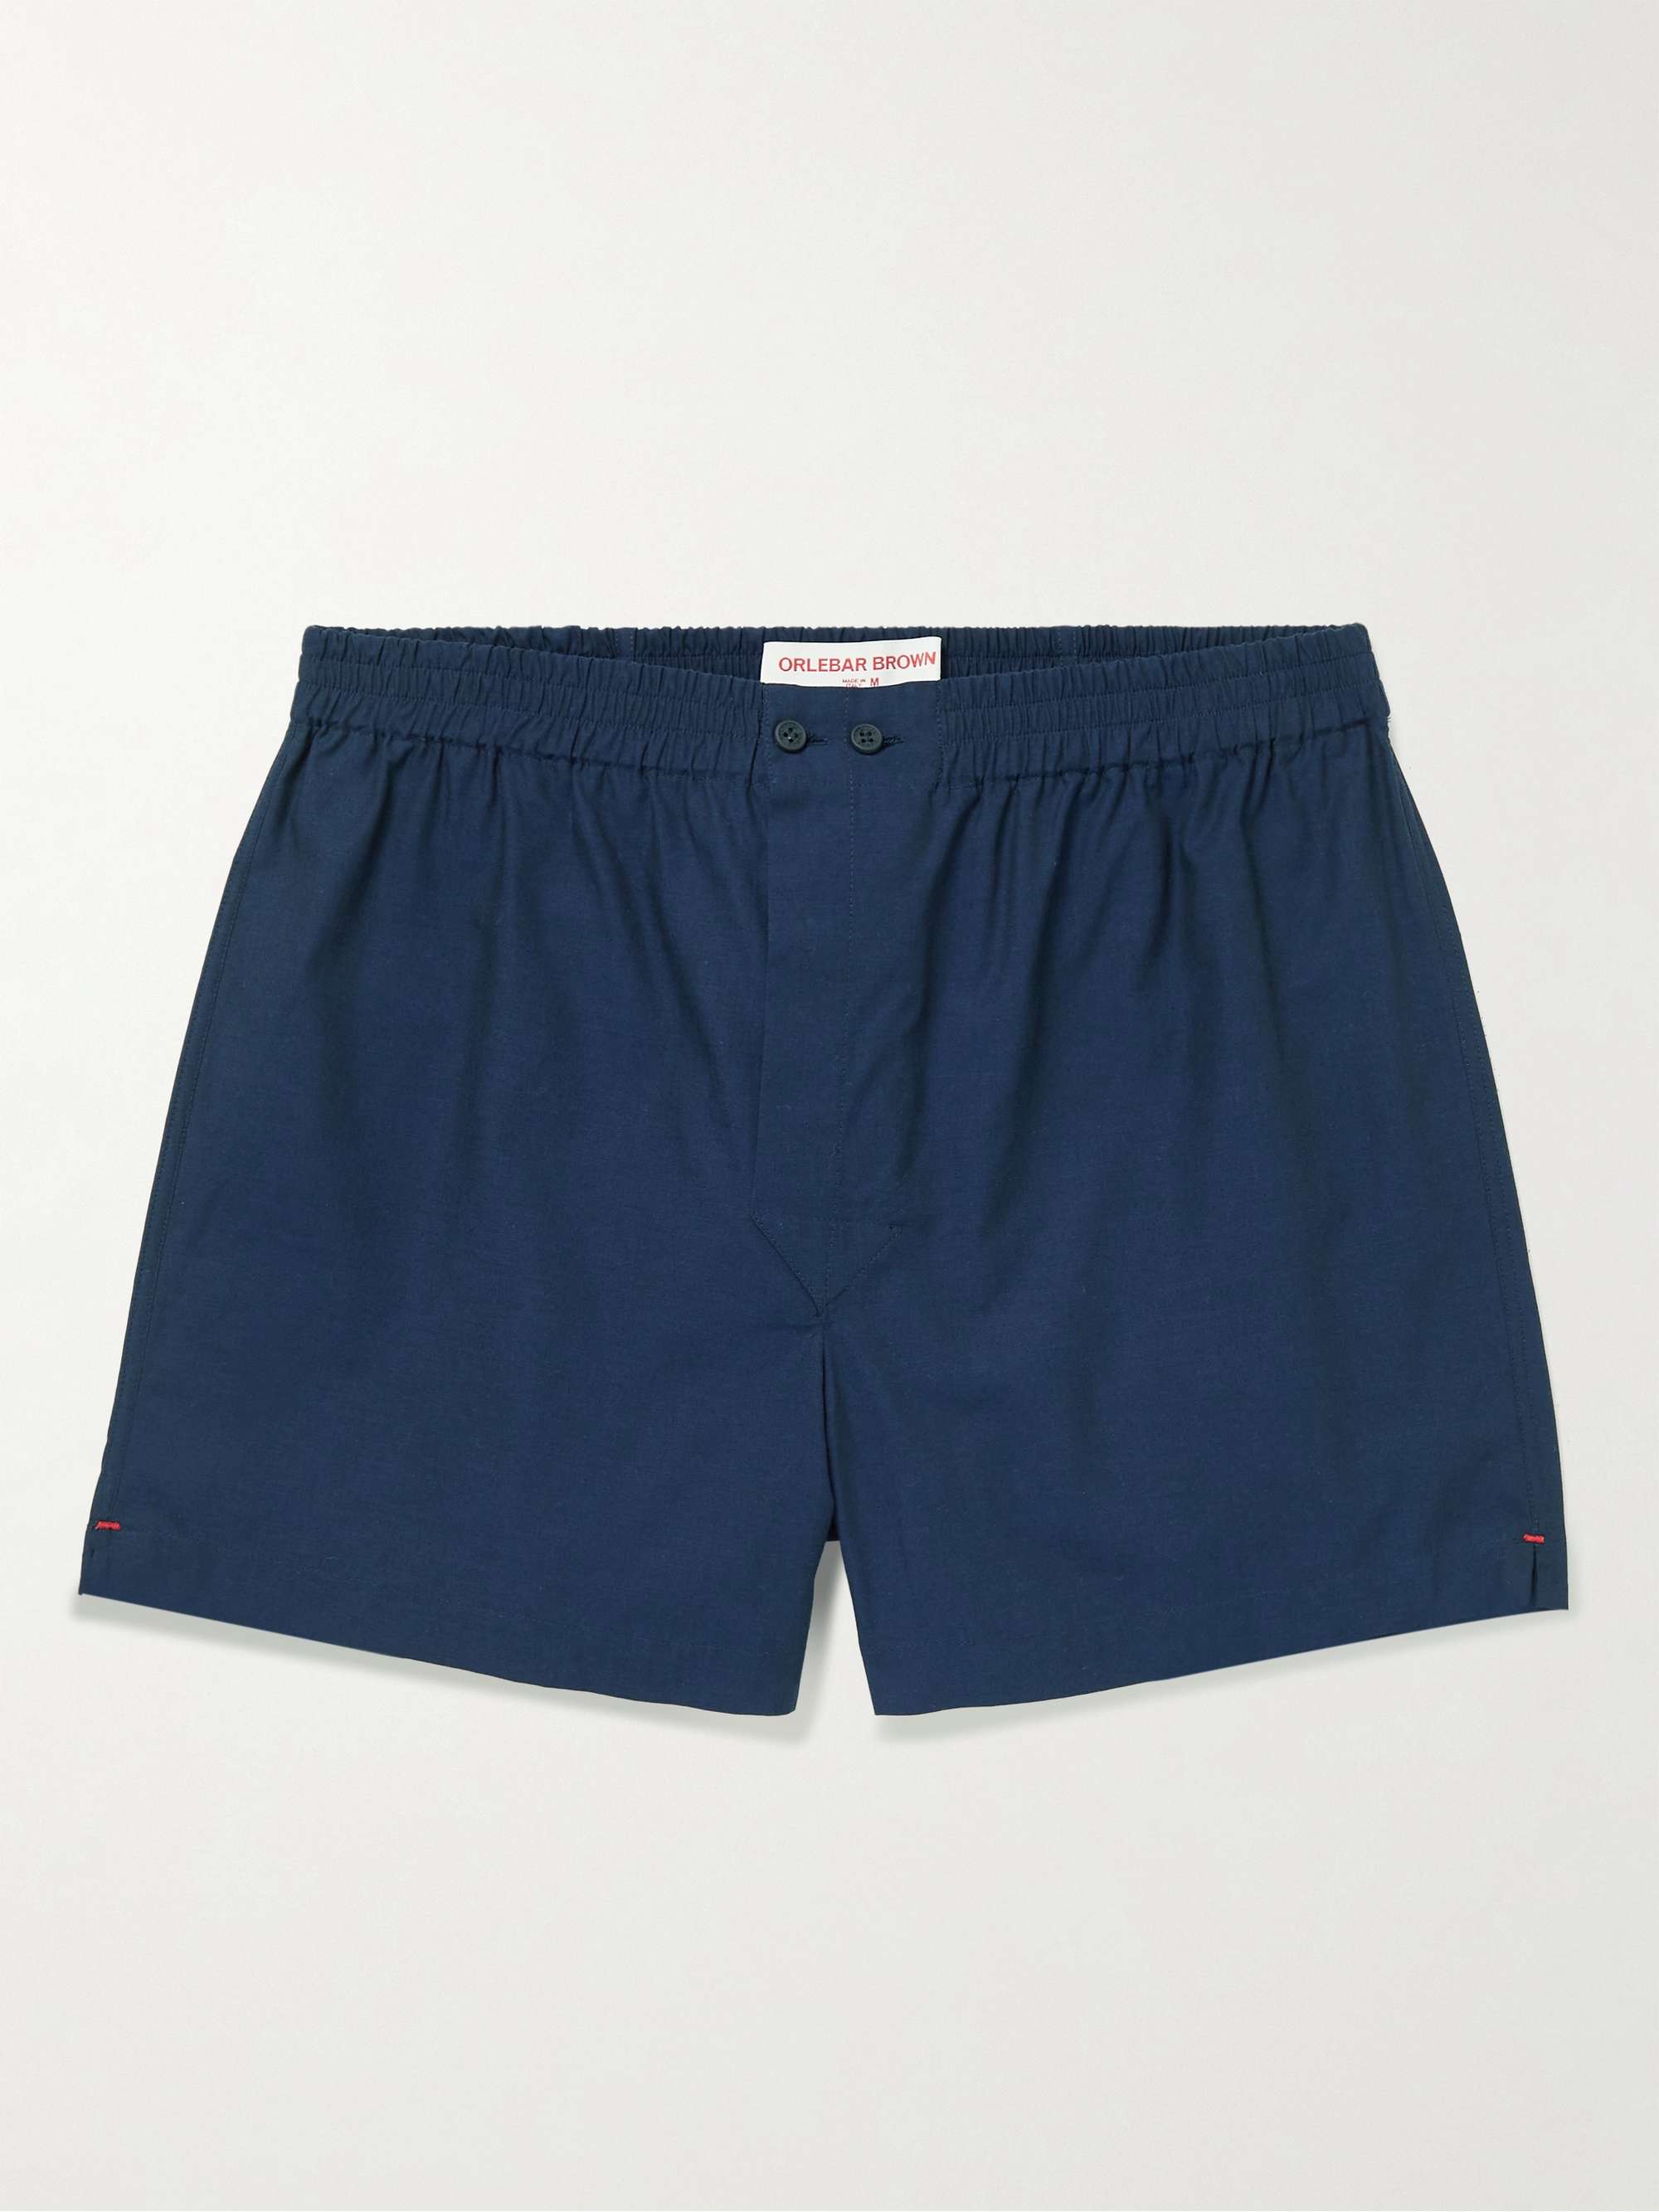 ORLEBAR BROWN Cotton Boxer Shorts